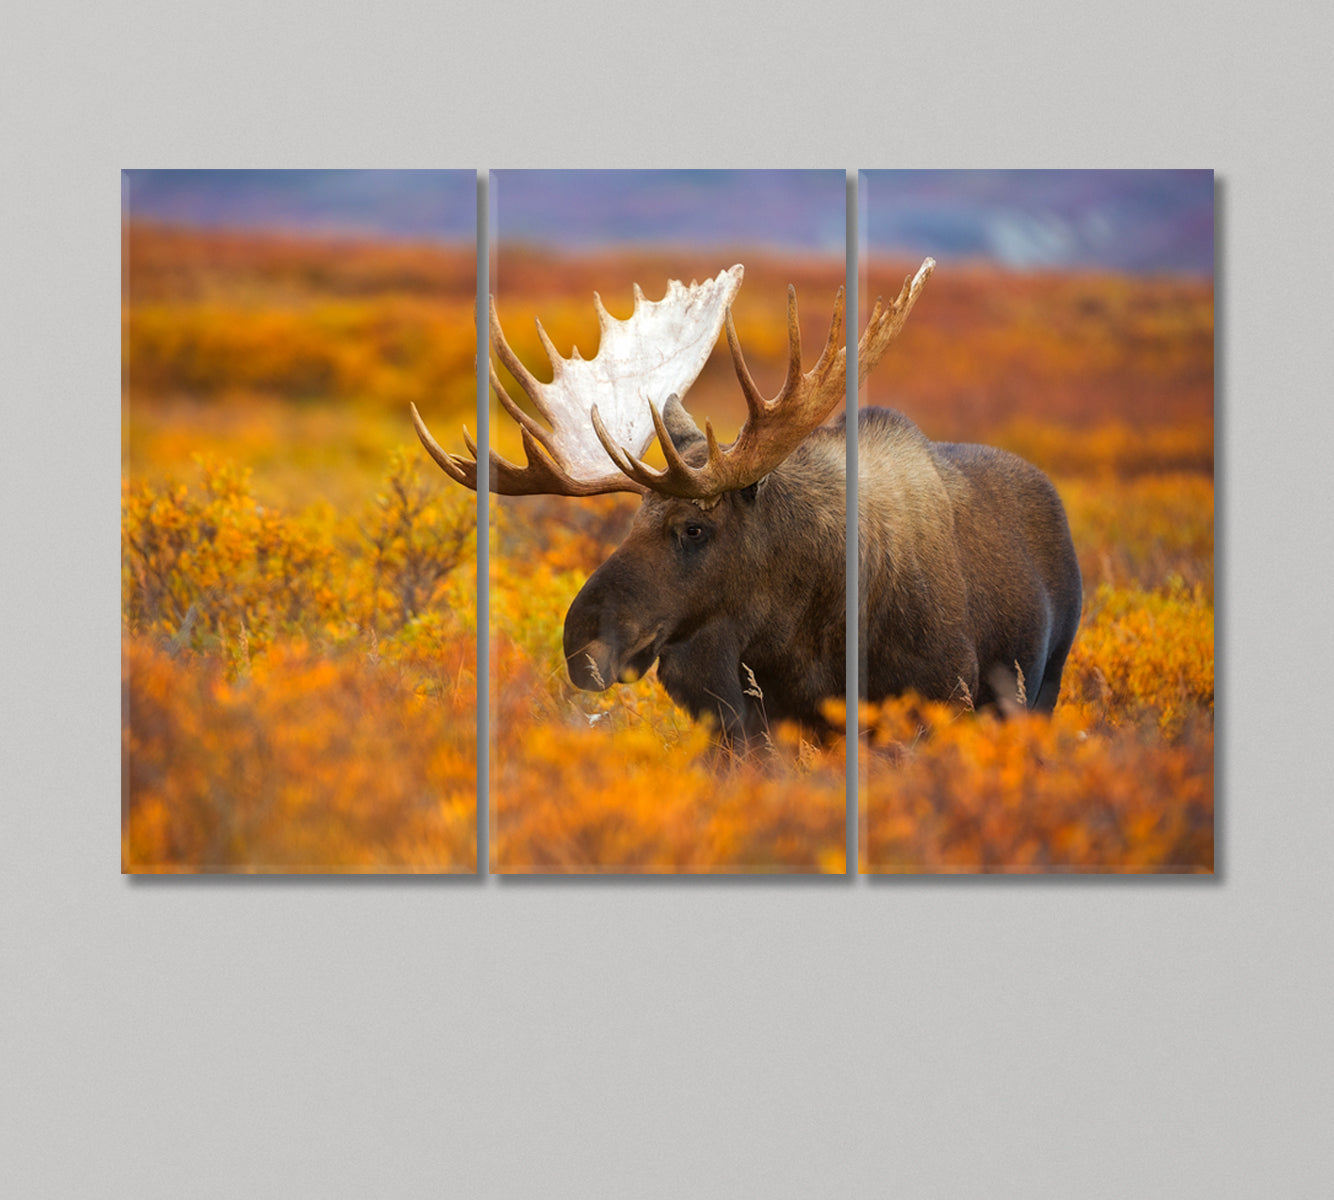 Elk in Autumn Field Canvas Print-Canvas Print-CetArt-3 Panels-36x24 inches-CetArt